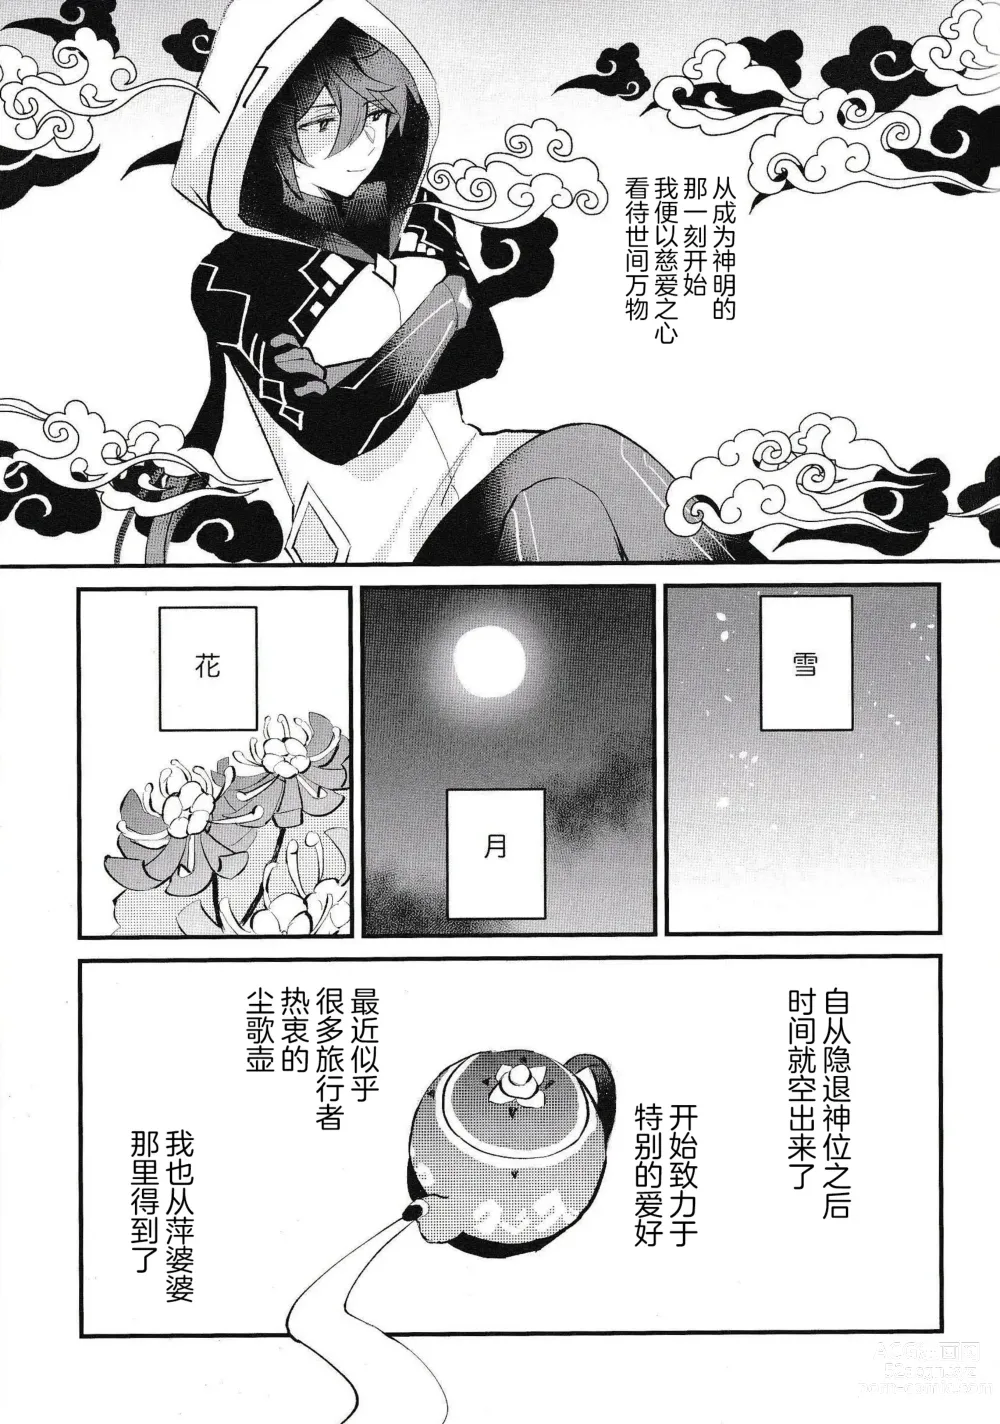 Page 3 of doujinshi Setsugetsuka Tomo ni - share a snow, moon, and flowers